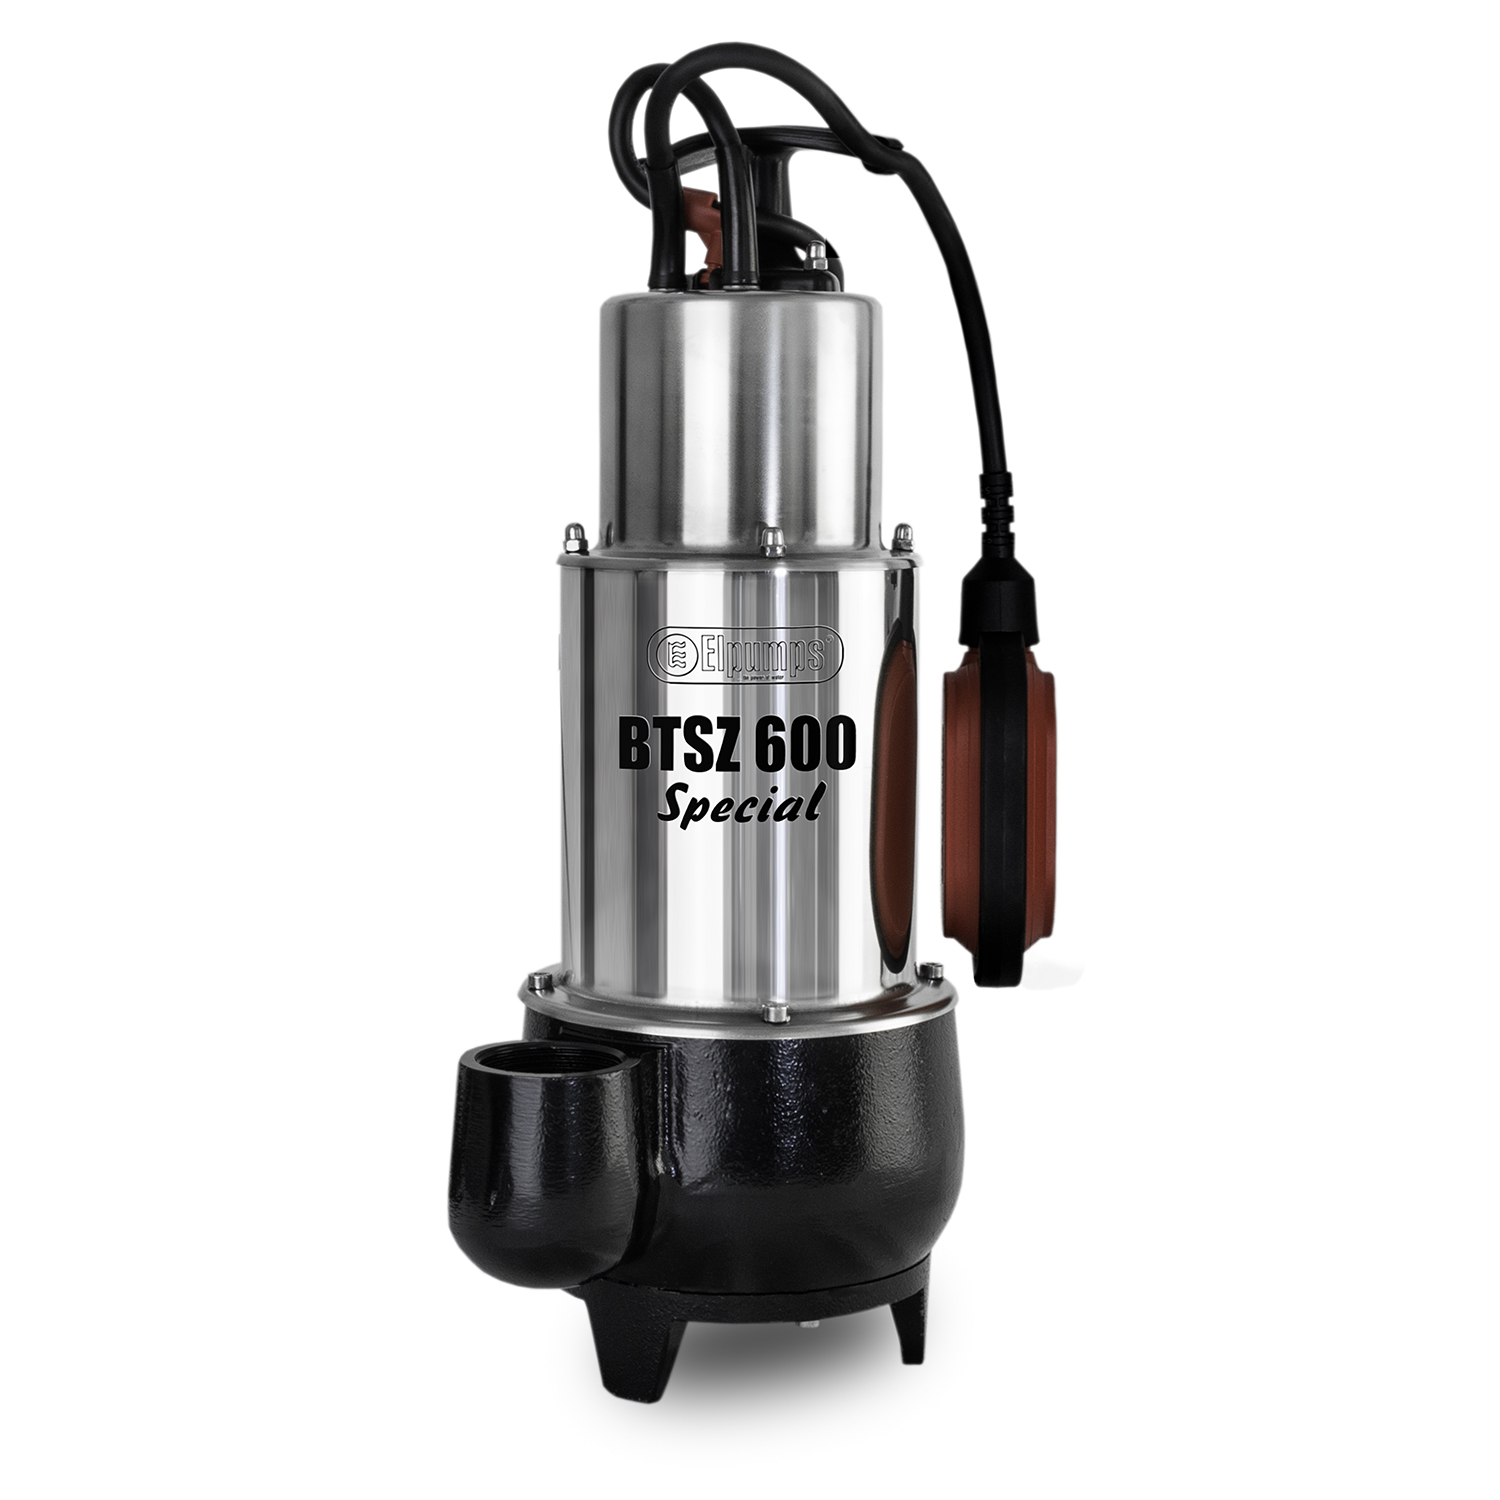 BTSZ 600 SPECIAL Free-flow (Vortex) submersible pumps for sewage